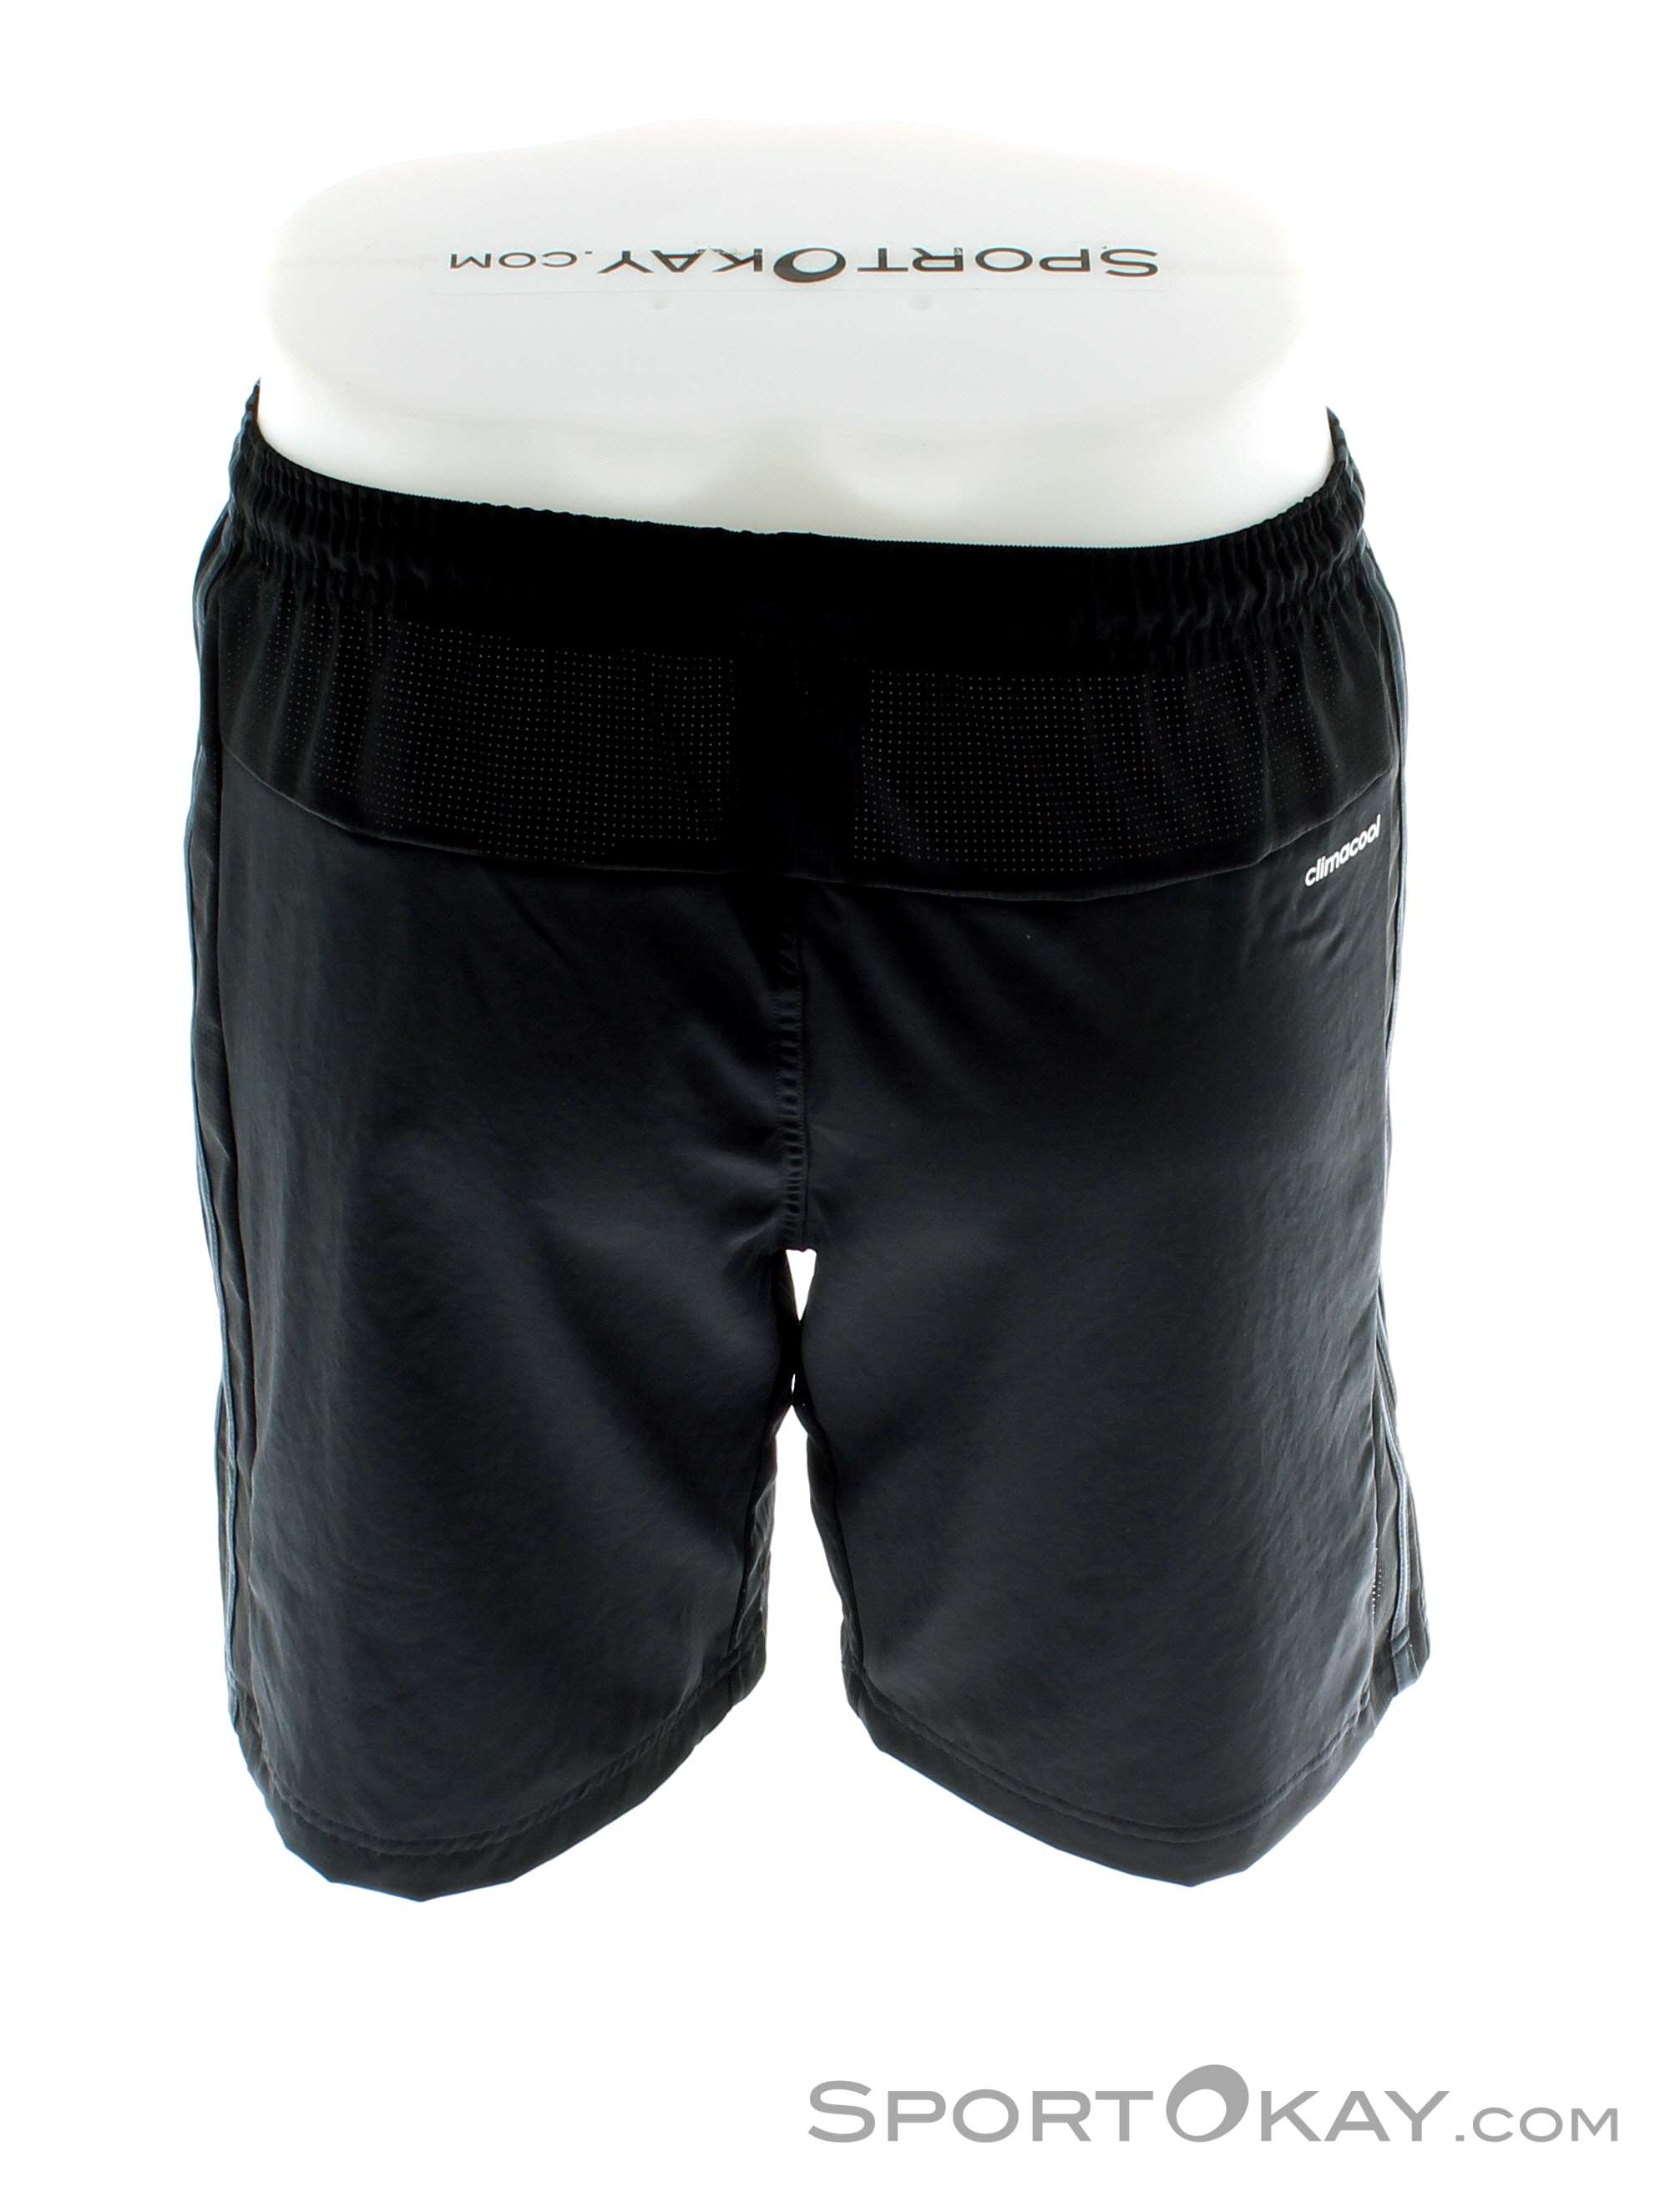 Adidas Cool Shorts Mens Training - Pants - Fitness Clothing - Fitness -